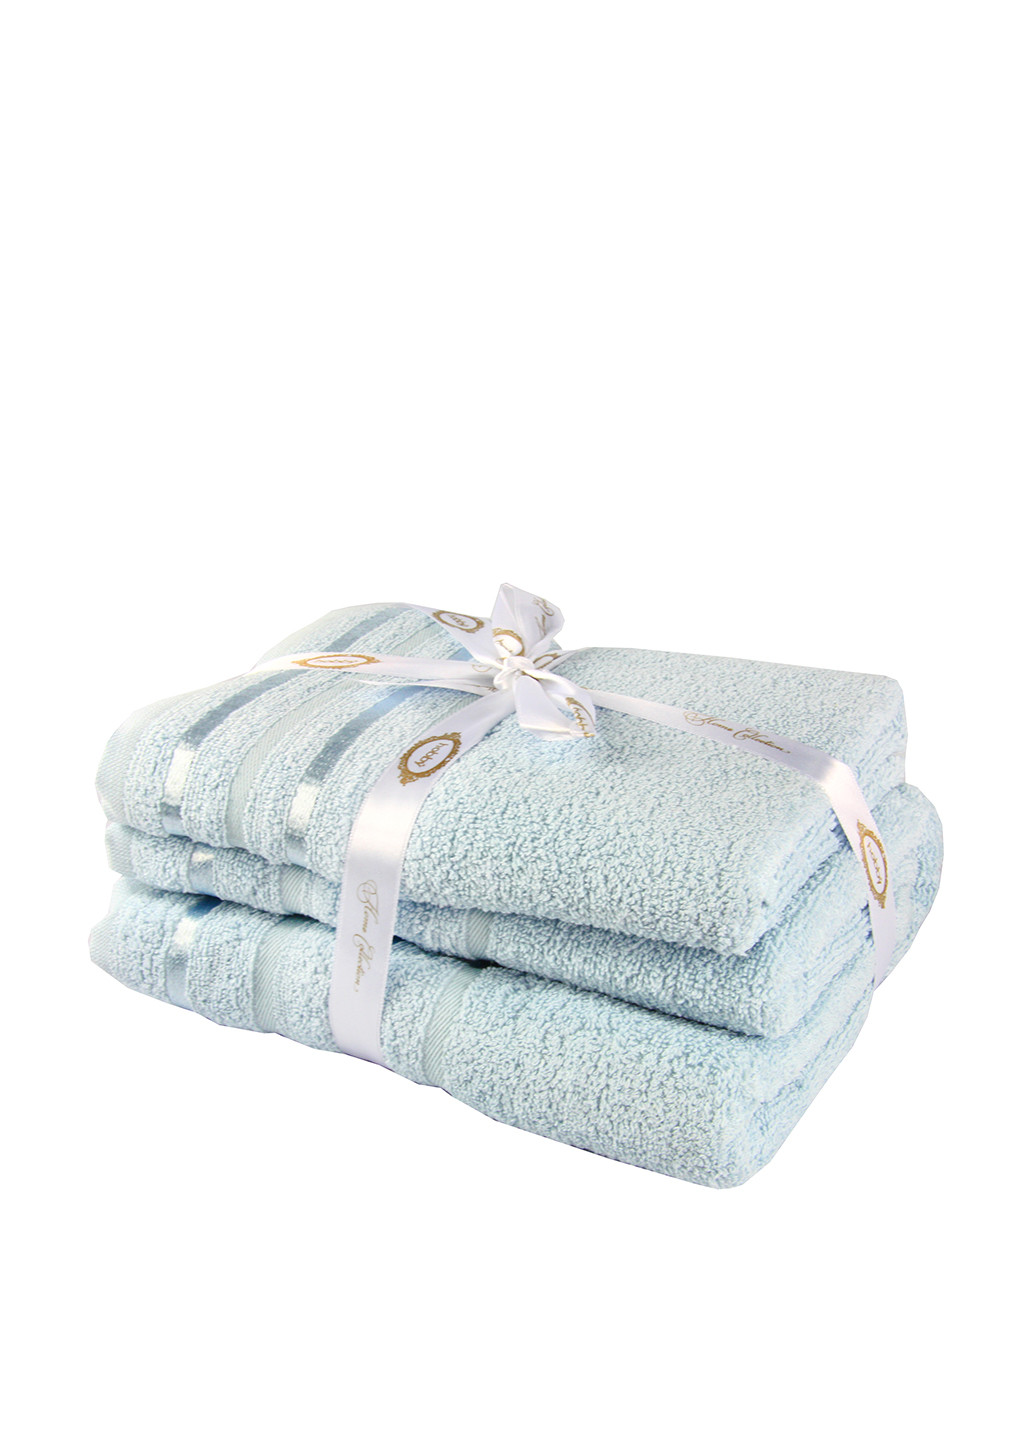 Hobby полотенце (2 шт.) полоска светло-голубой производство - Турция